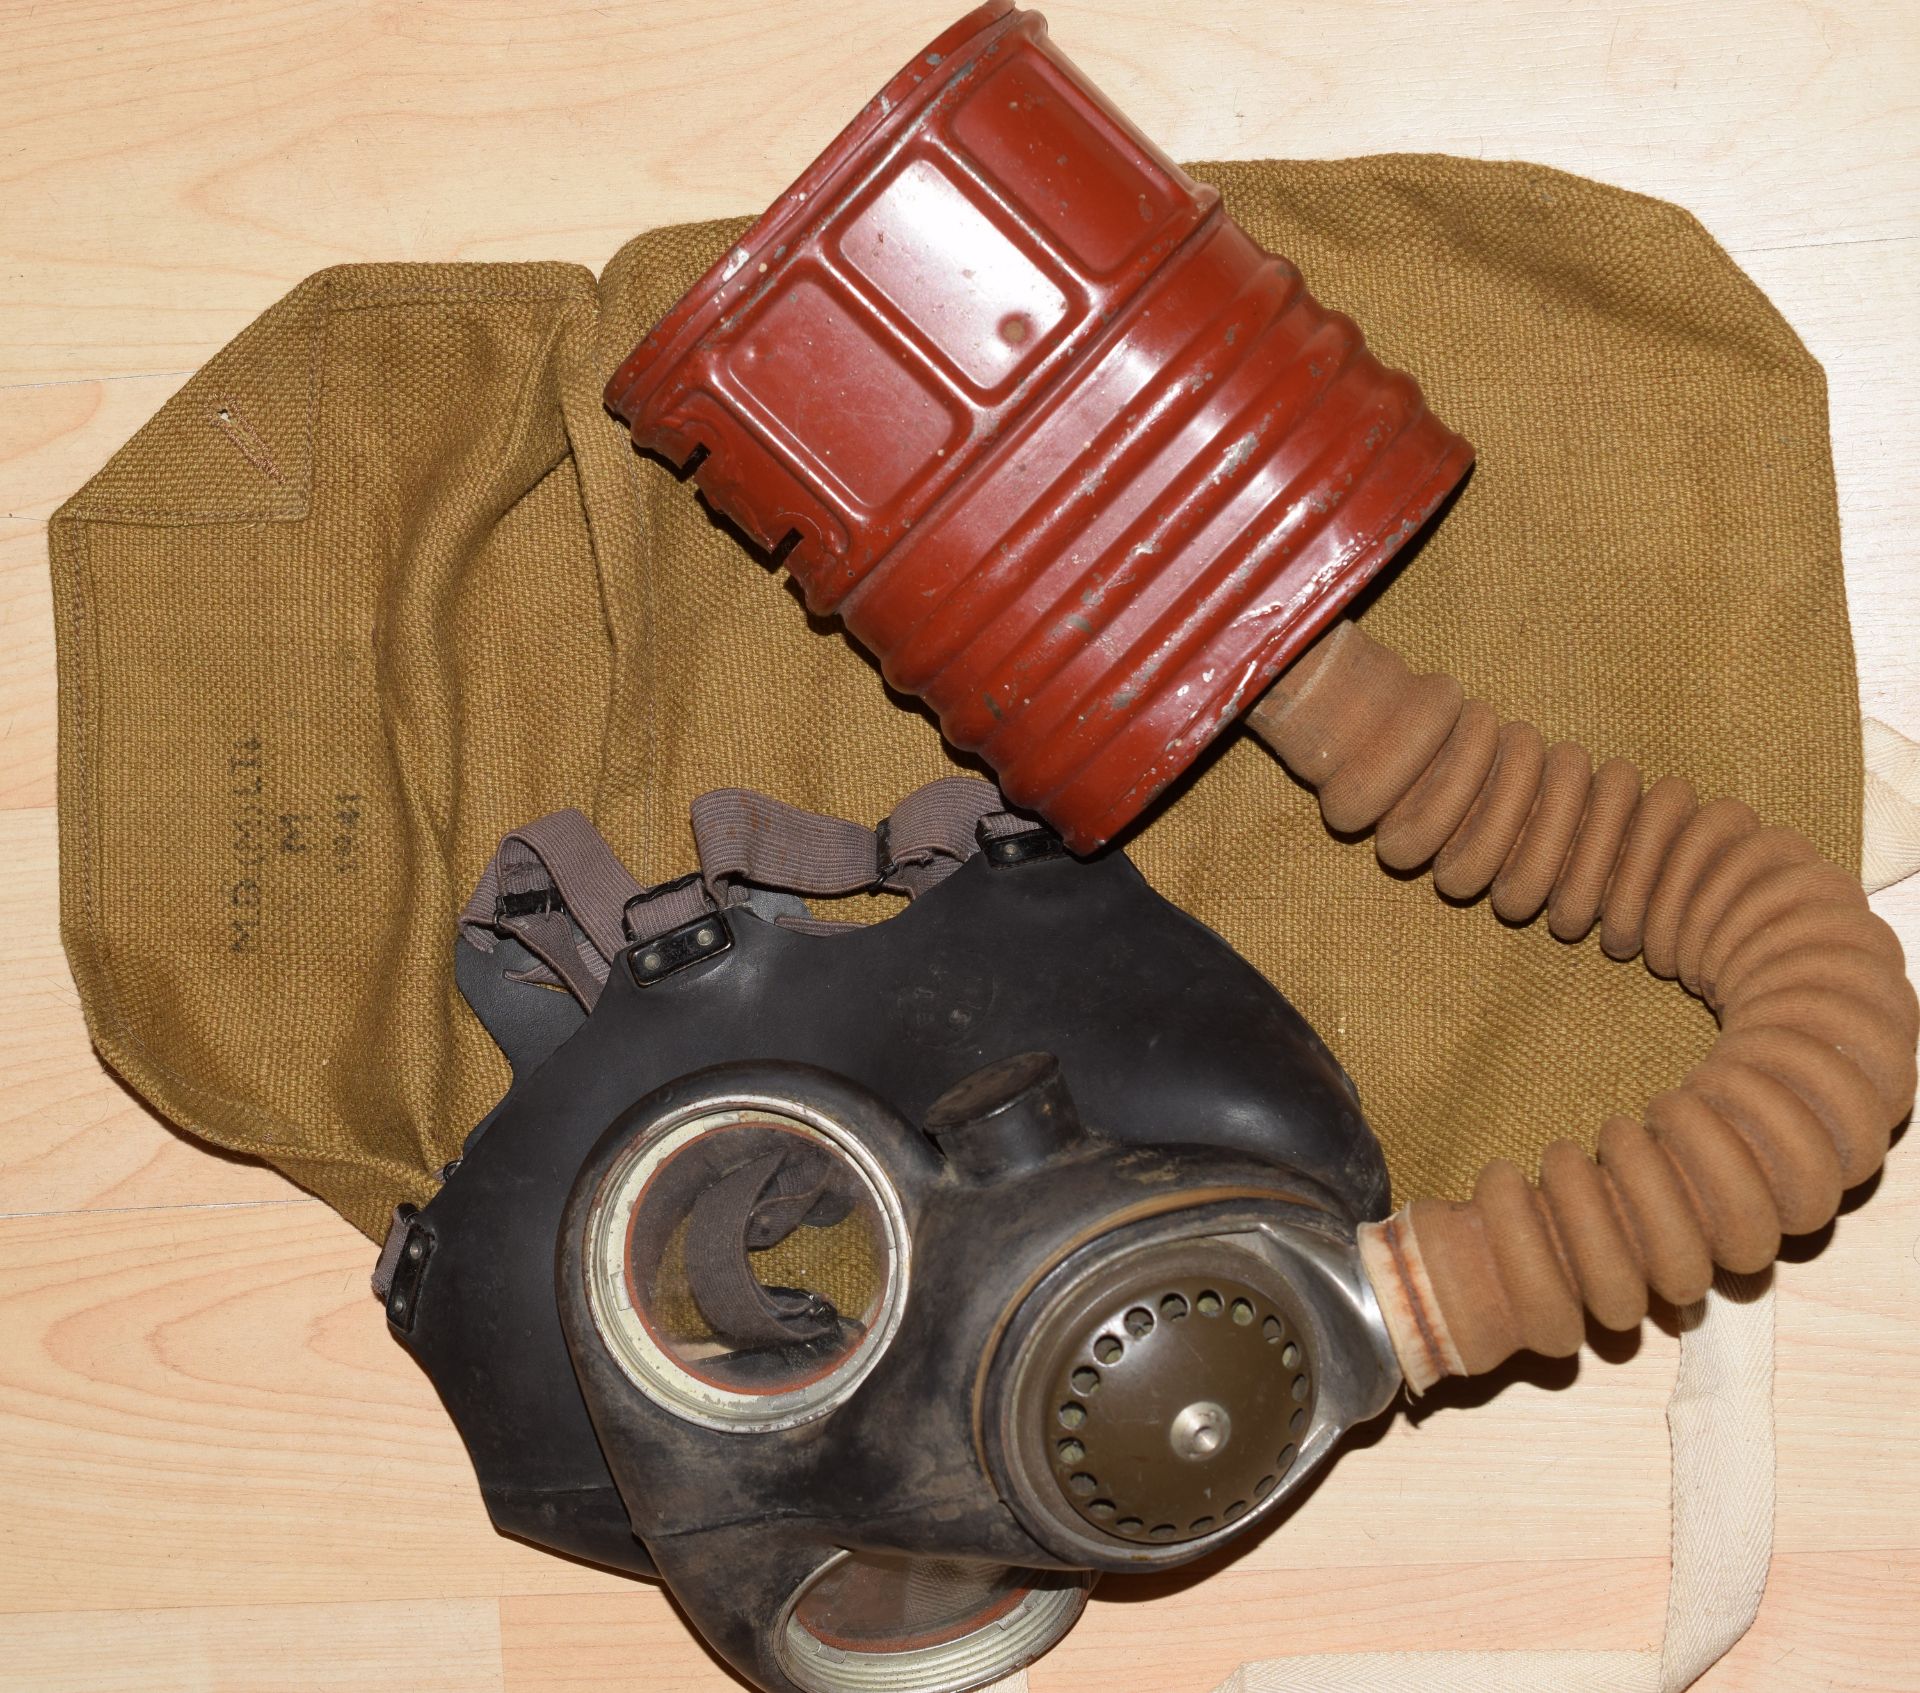 WW2 Spitfire Pilot's Gun Camera And Memorabilia (Multiple Images 1 of 31) - Image 14 of 31